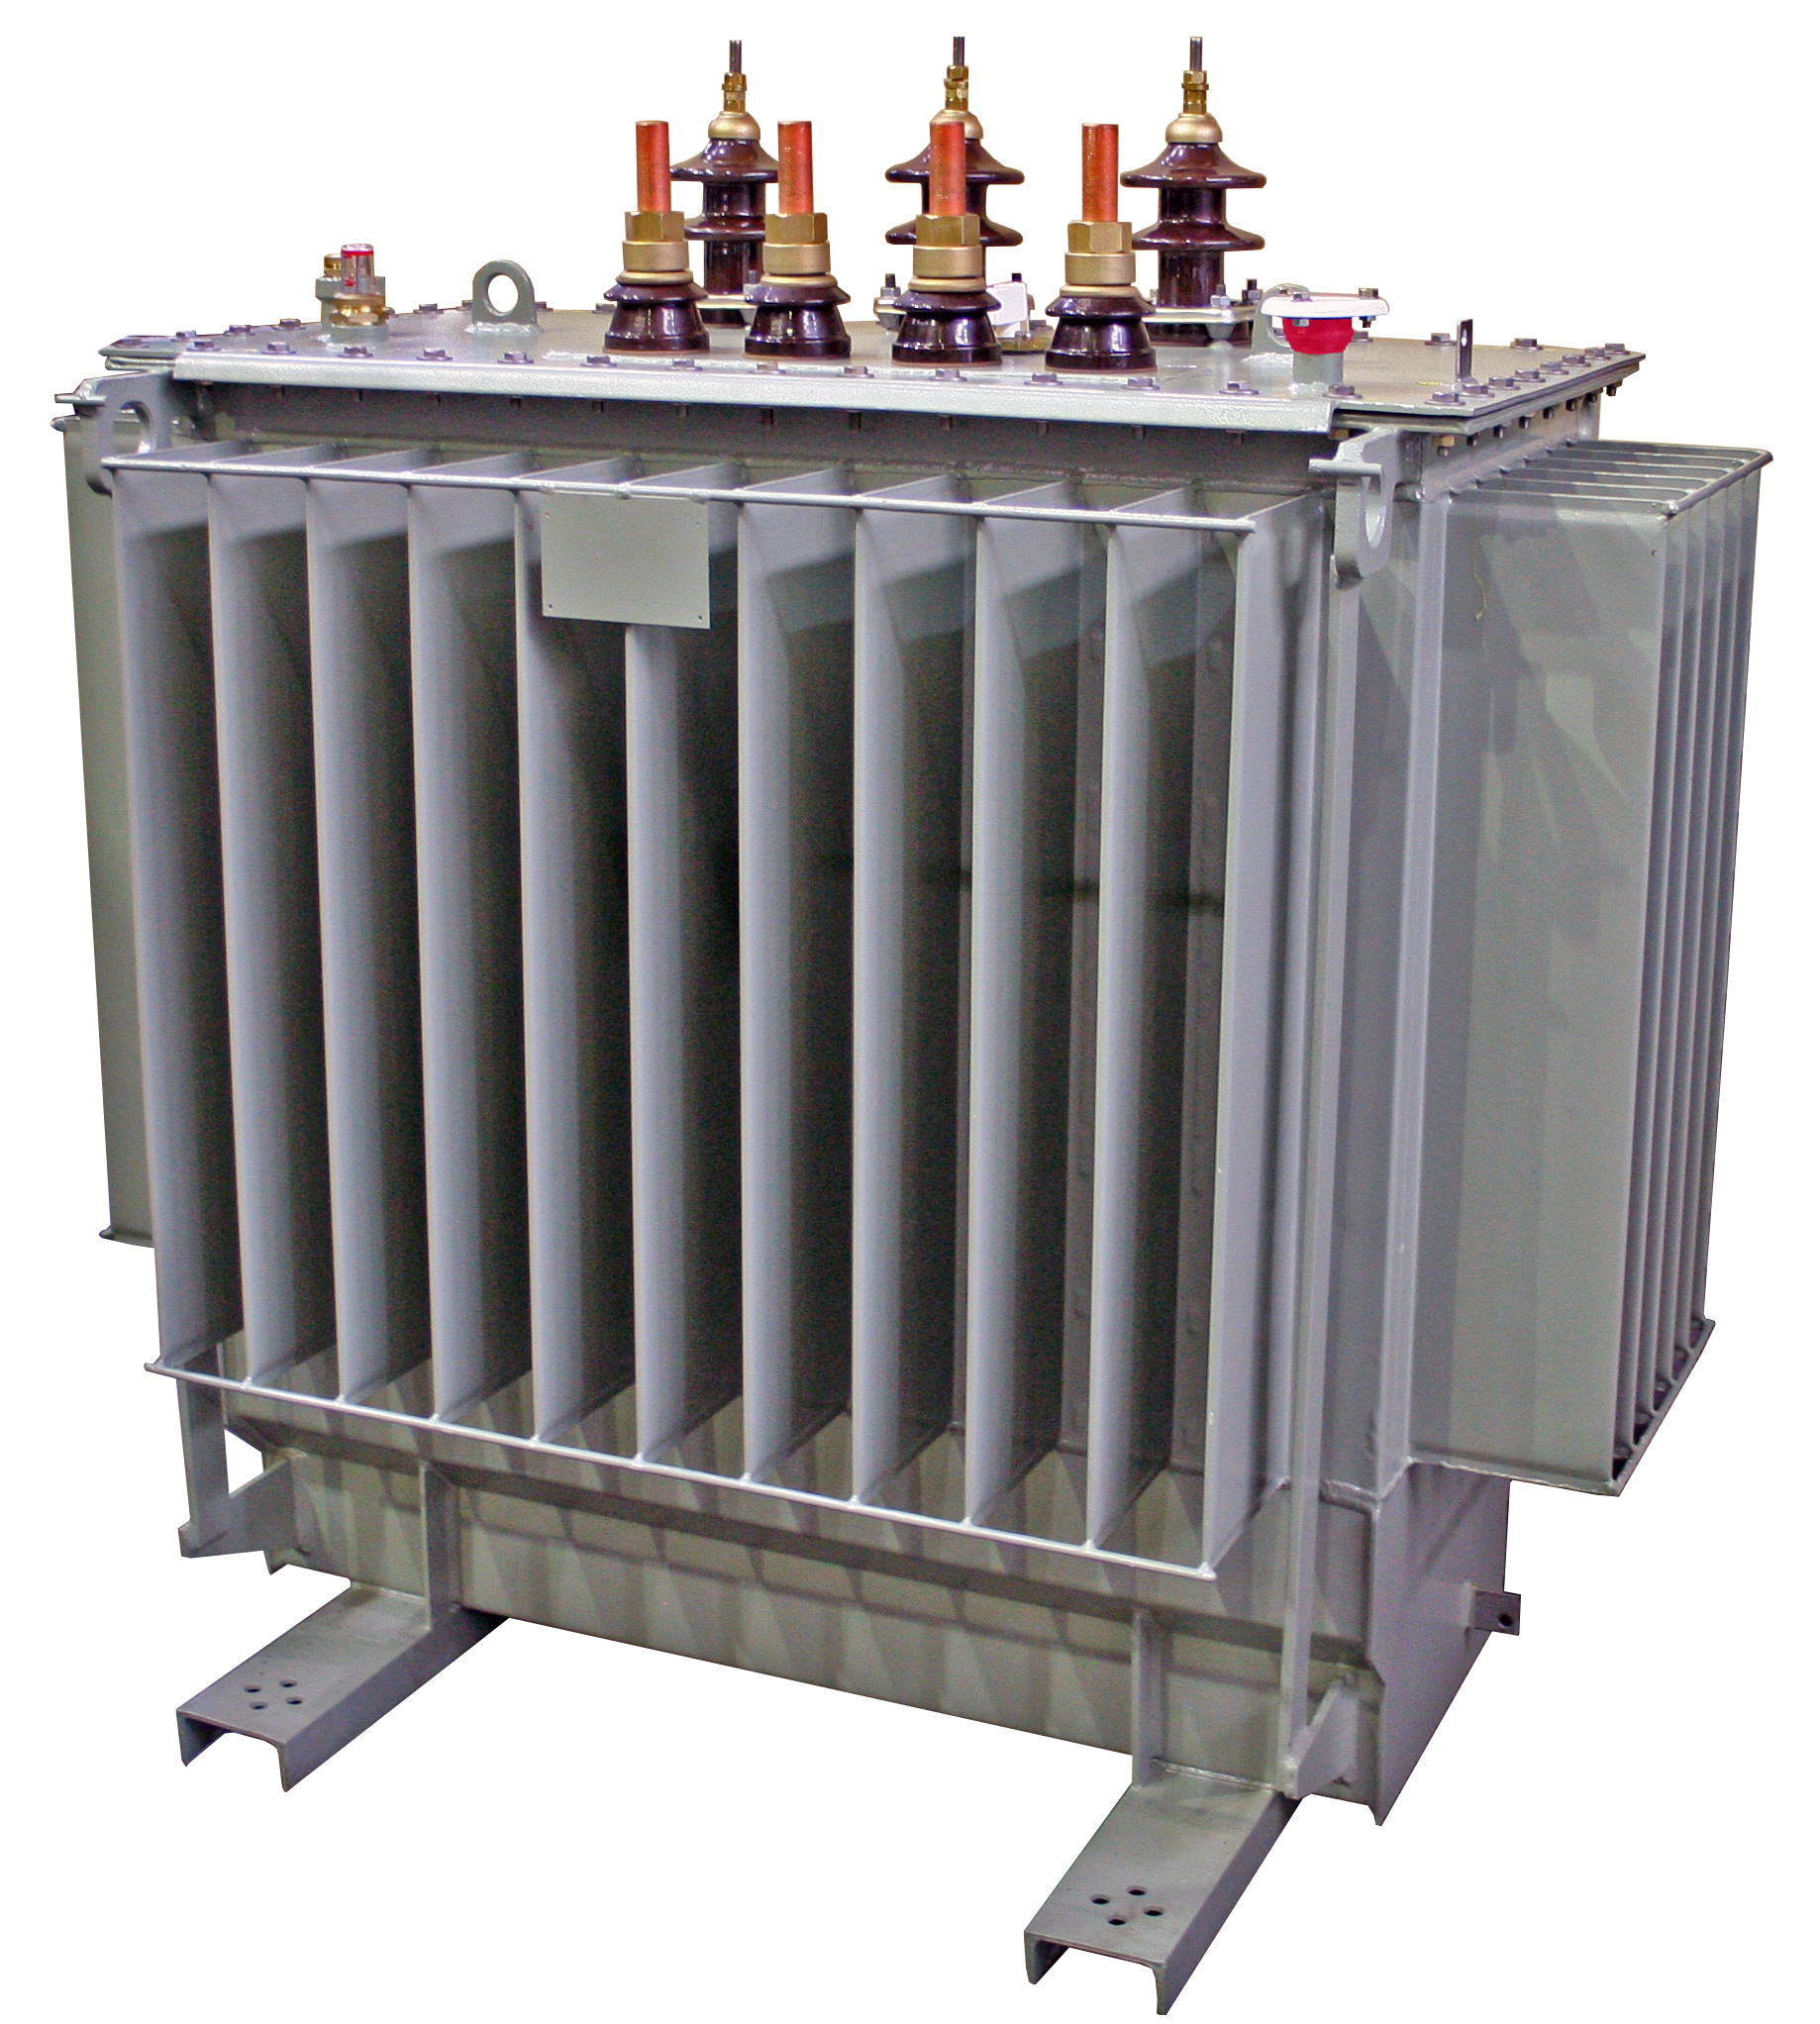 ТМГ32 transformers (energy-saving)